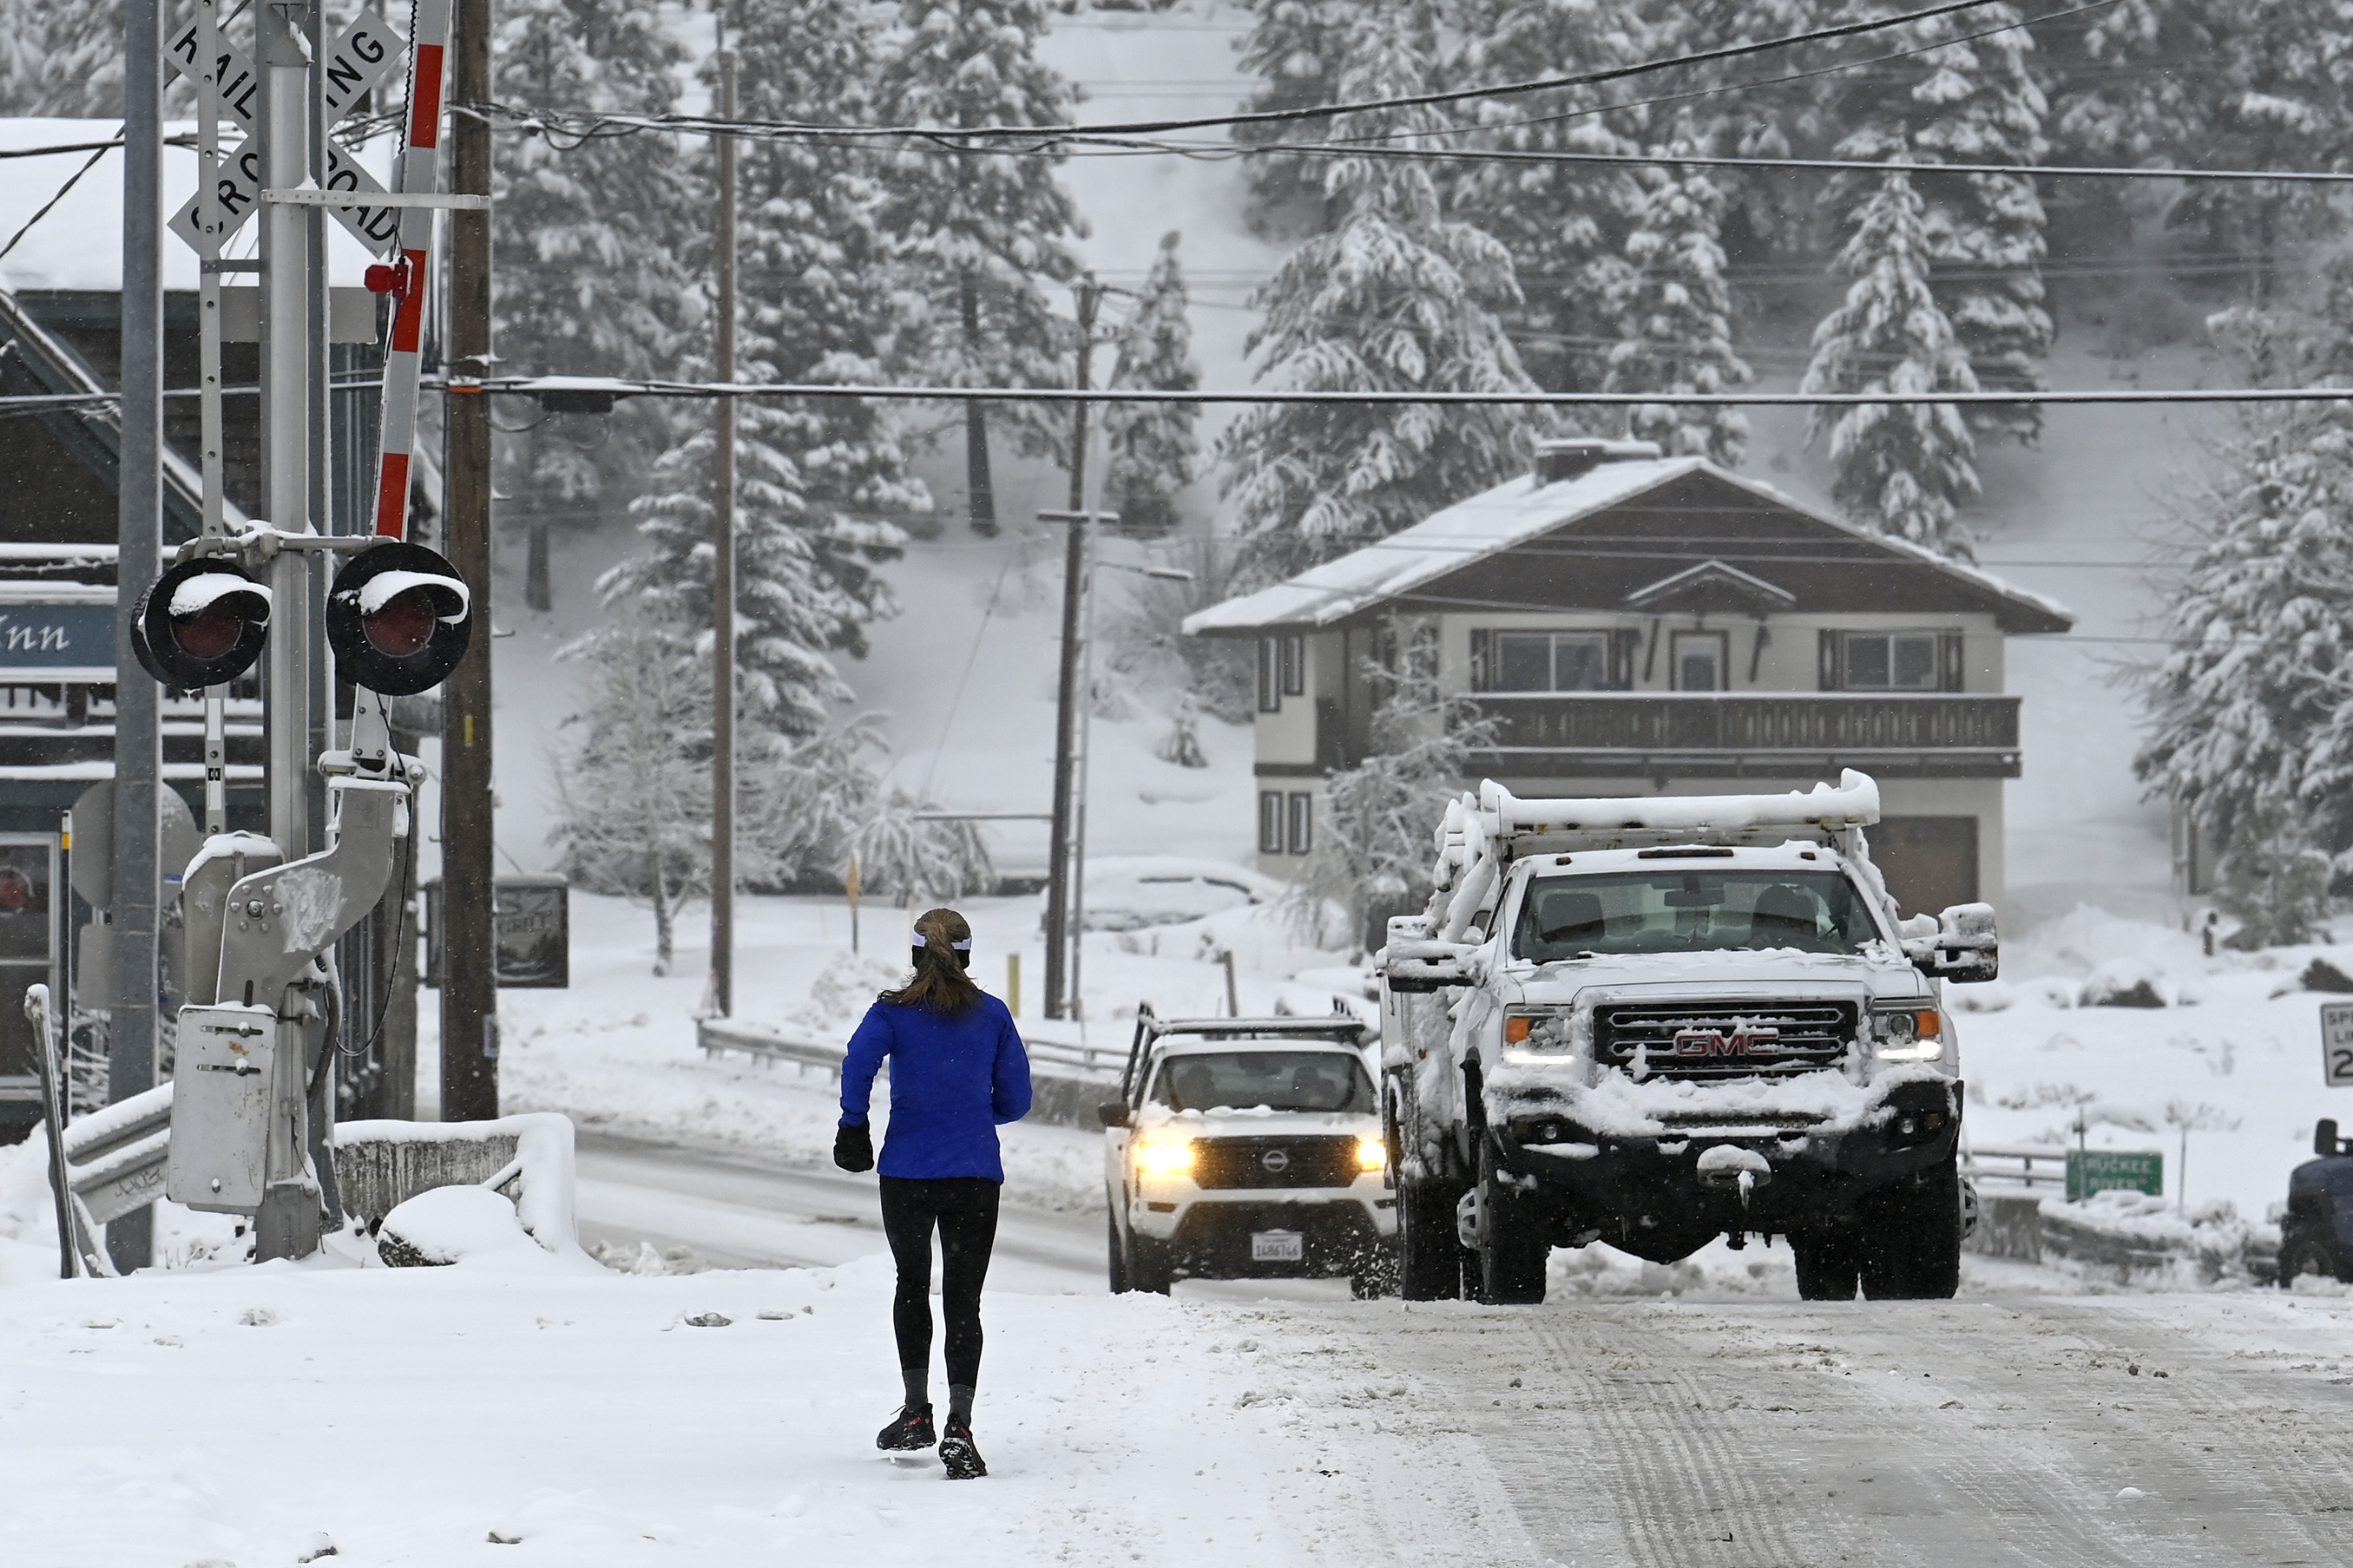 Woman runs down snowy street as trucks drive by